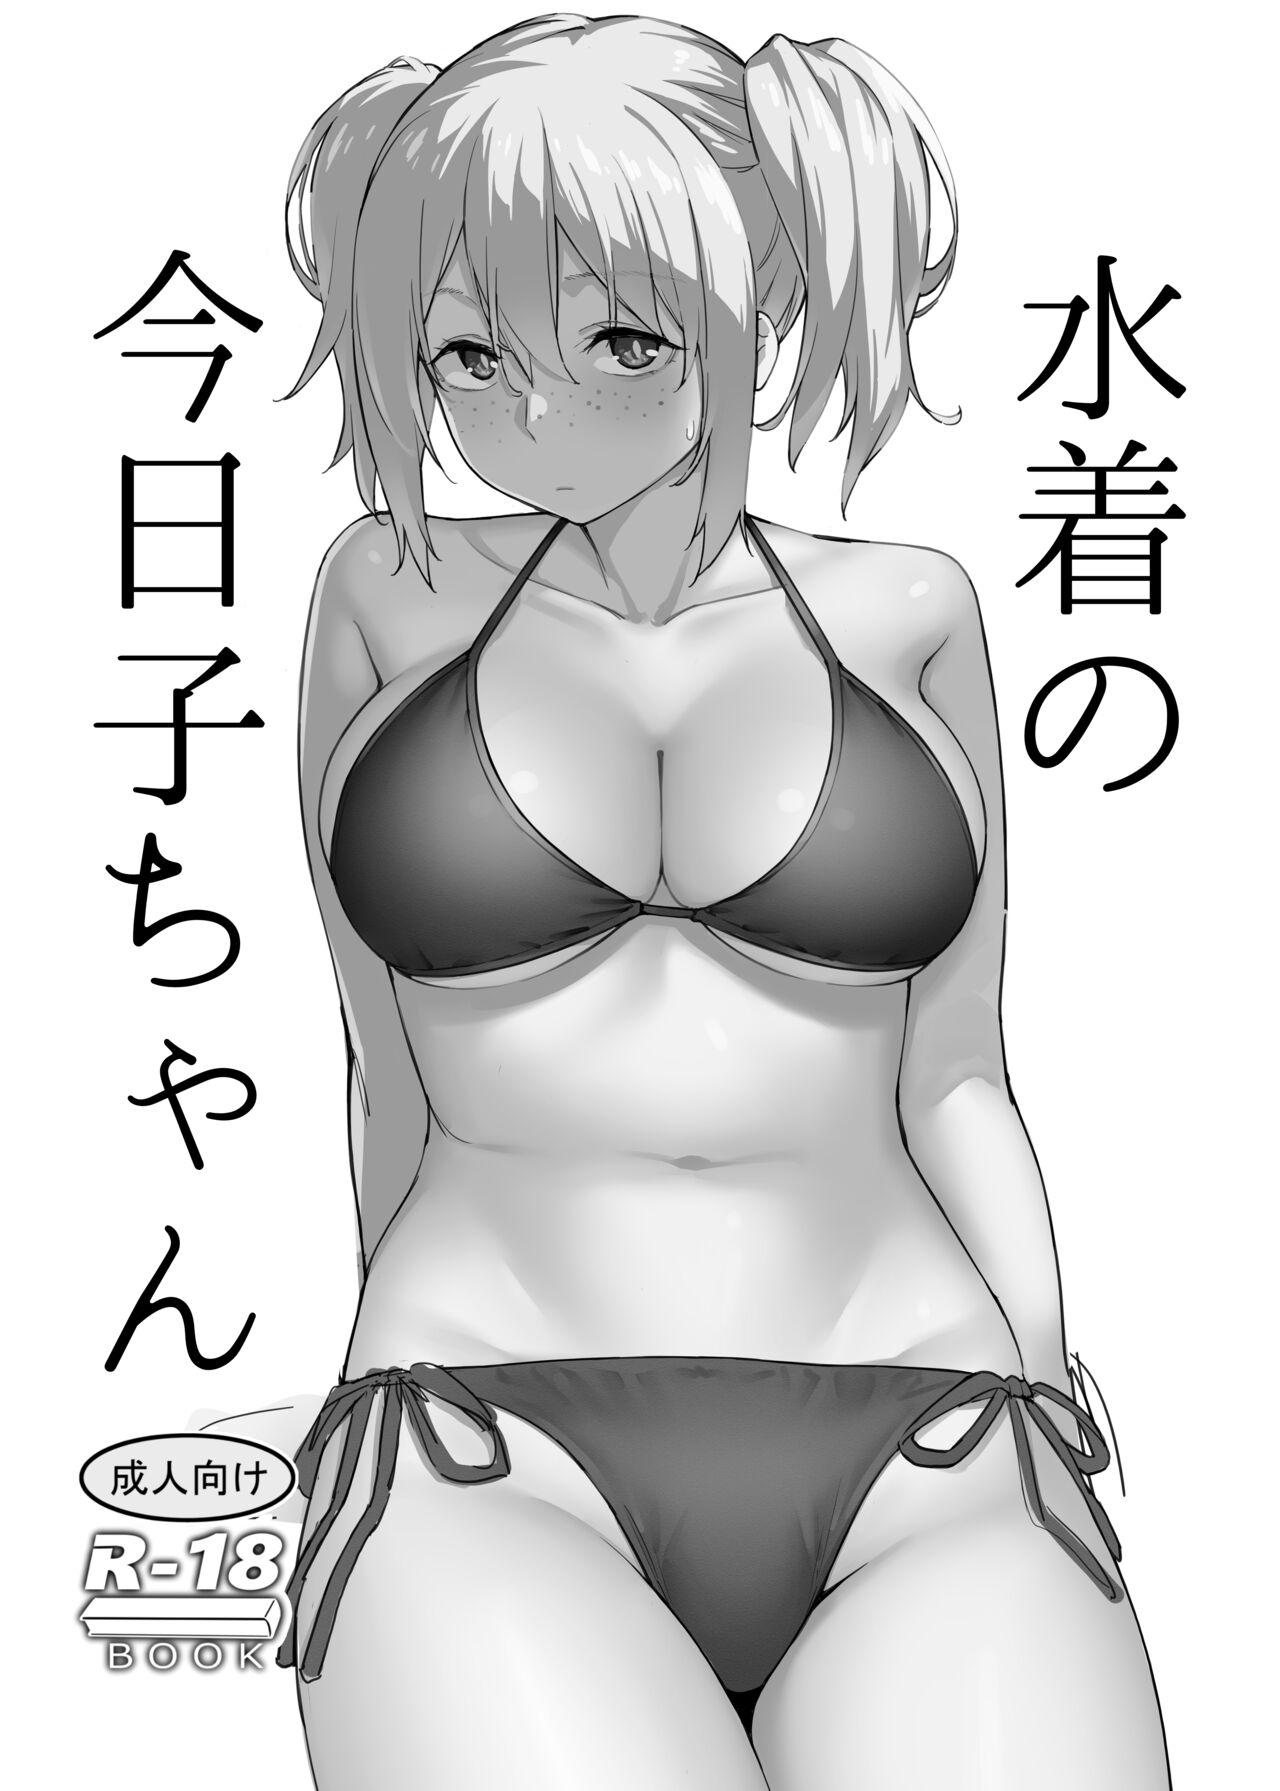 Kyouko-chan's swimsuit 0